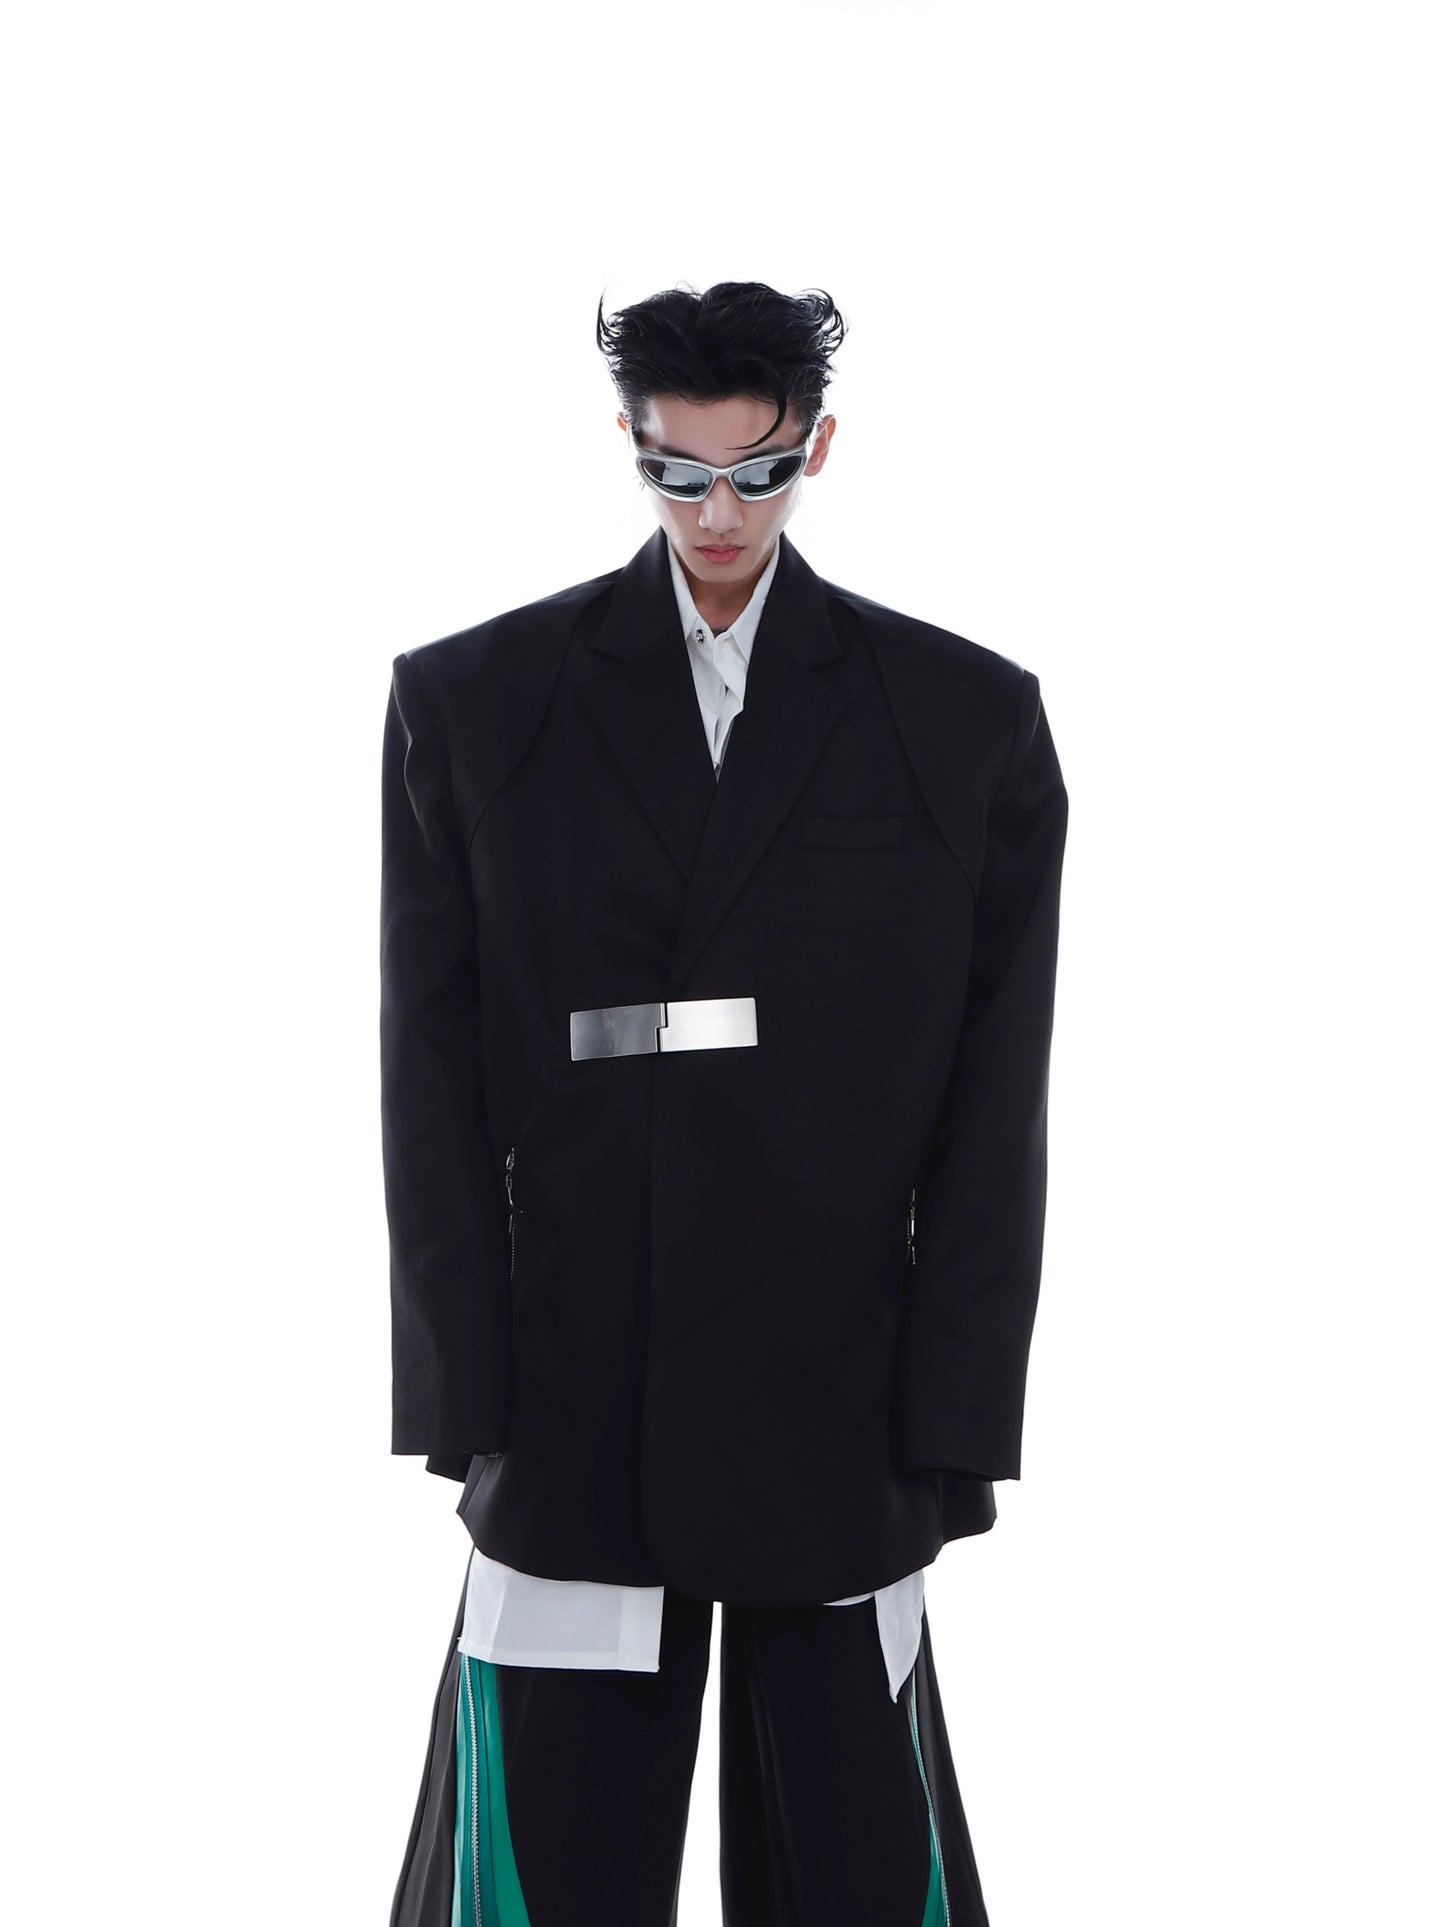 Cultur E24s niche metal snap design padded shoulder blazer jacket zipper panel ice silk fabric suit